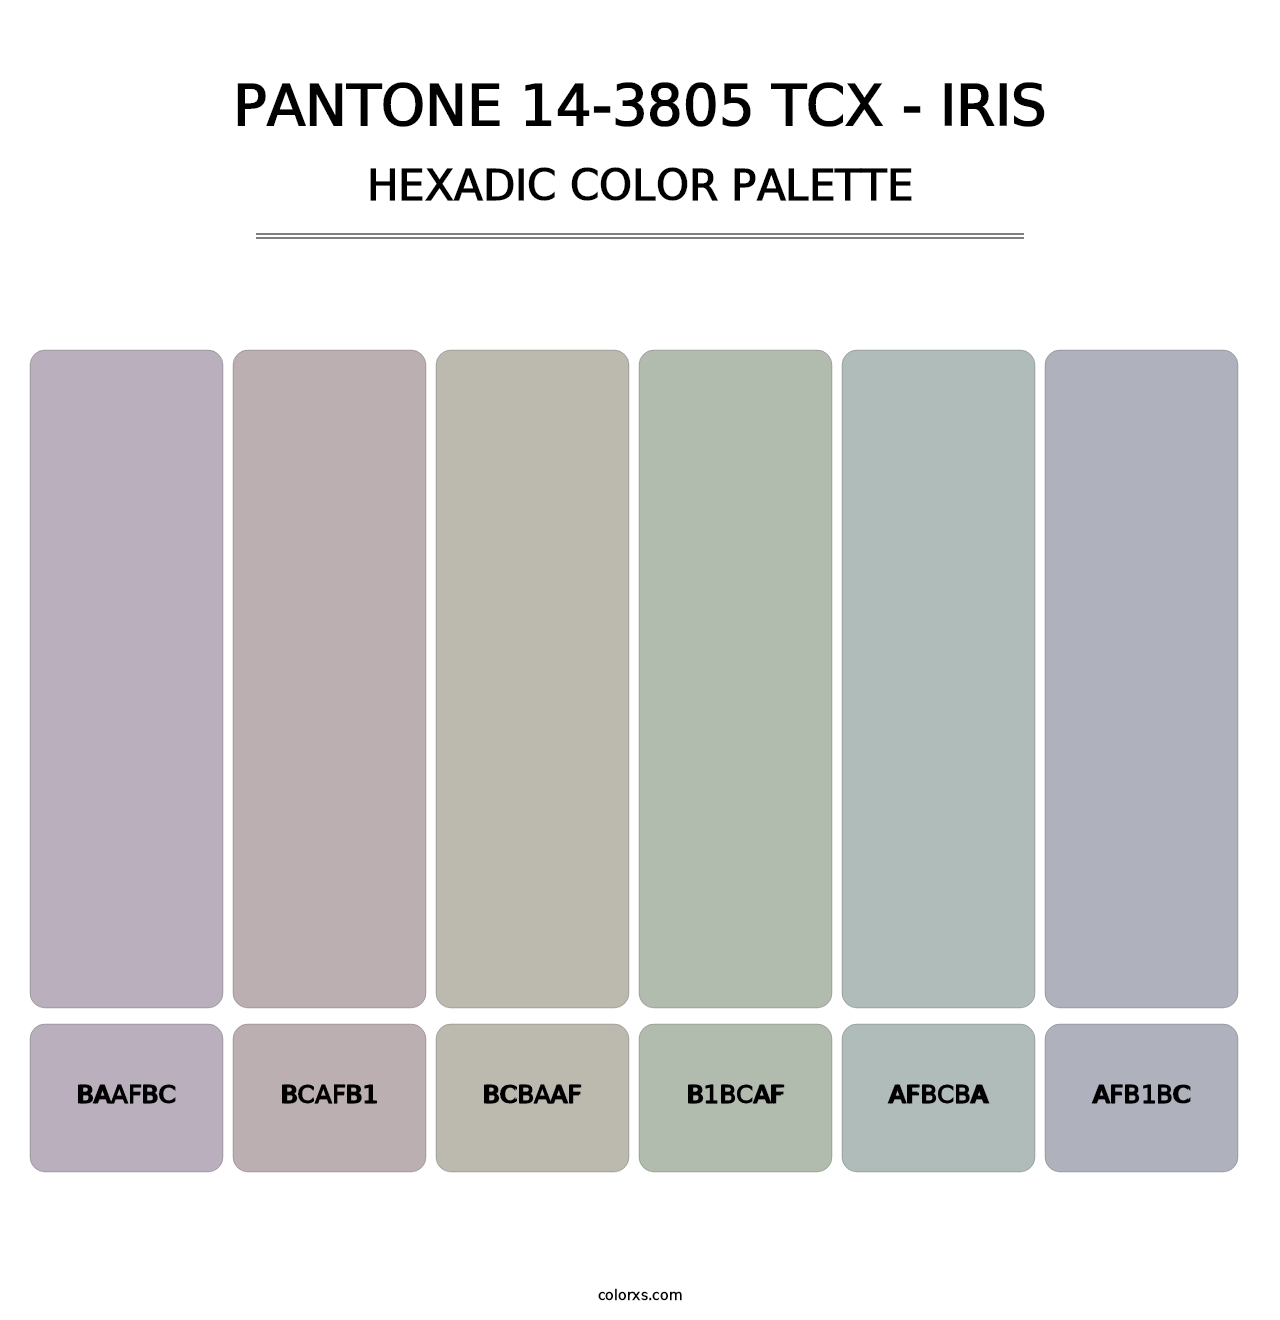 PANTONE 14-3805 TCX - Iris - Hexadic Color Palette